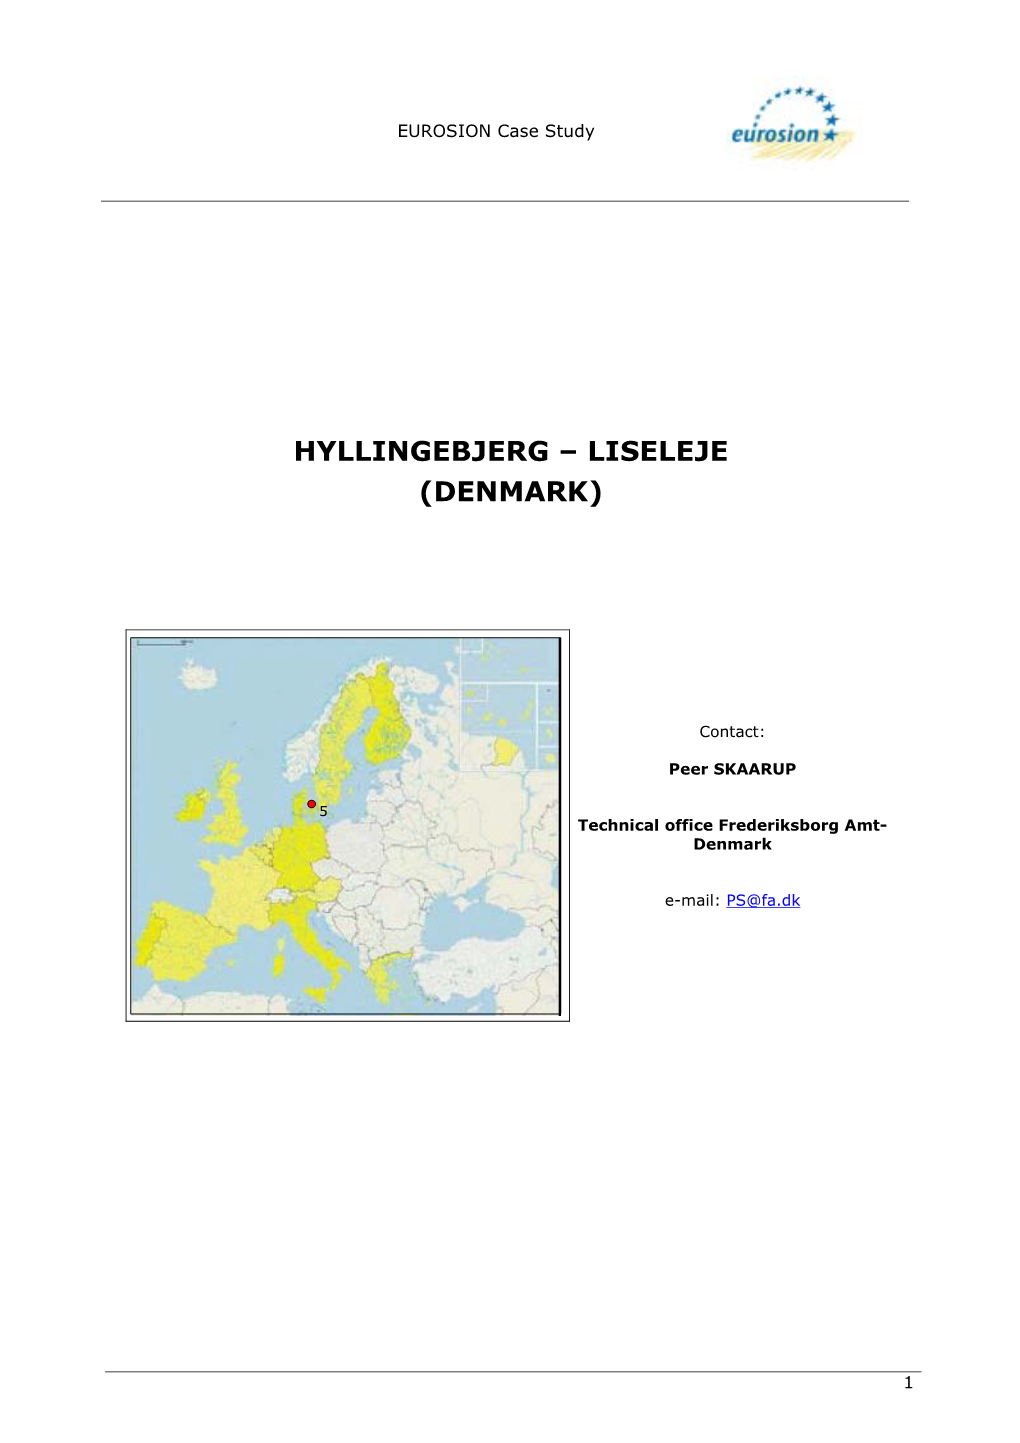 Hyllingebjerg – Liseleje (Denmark)